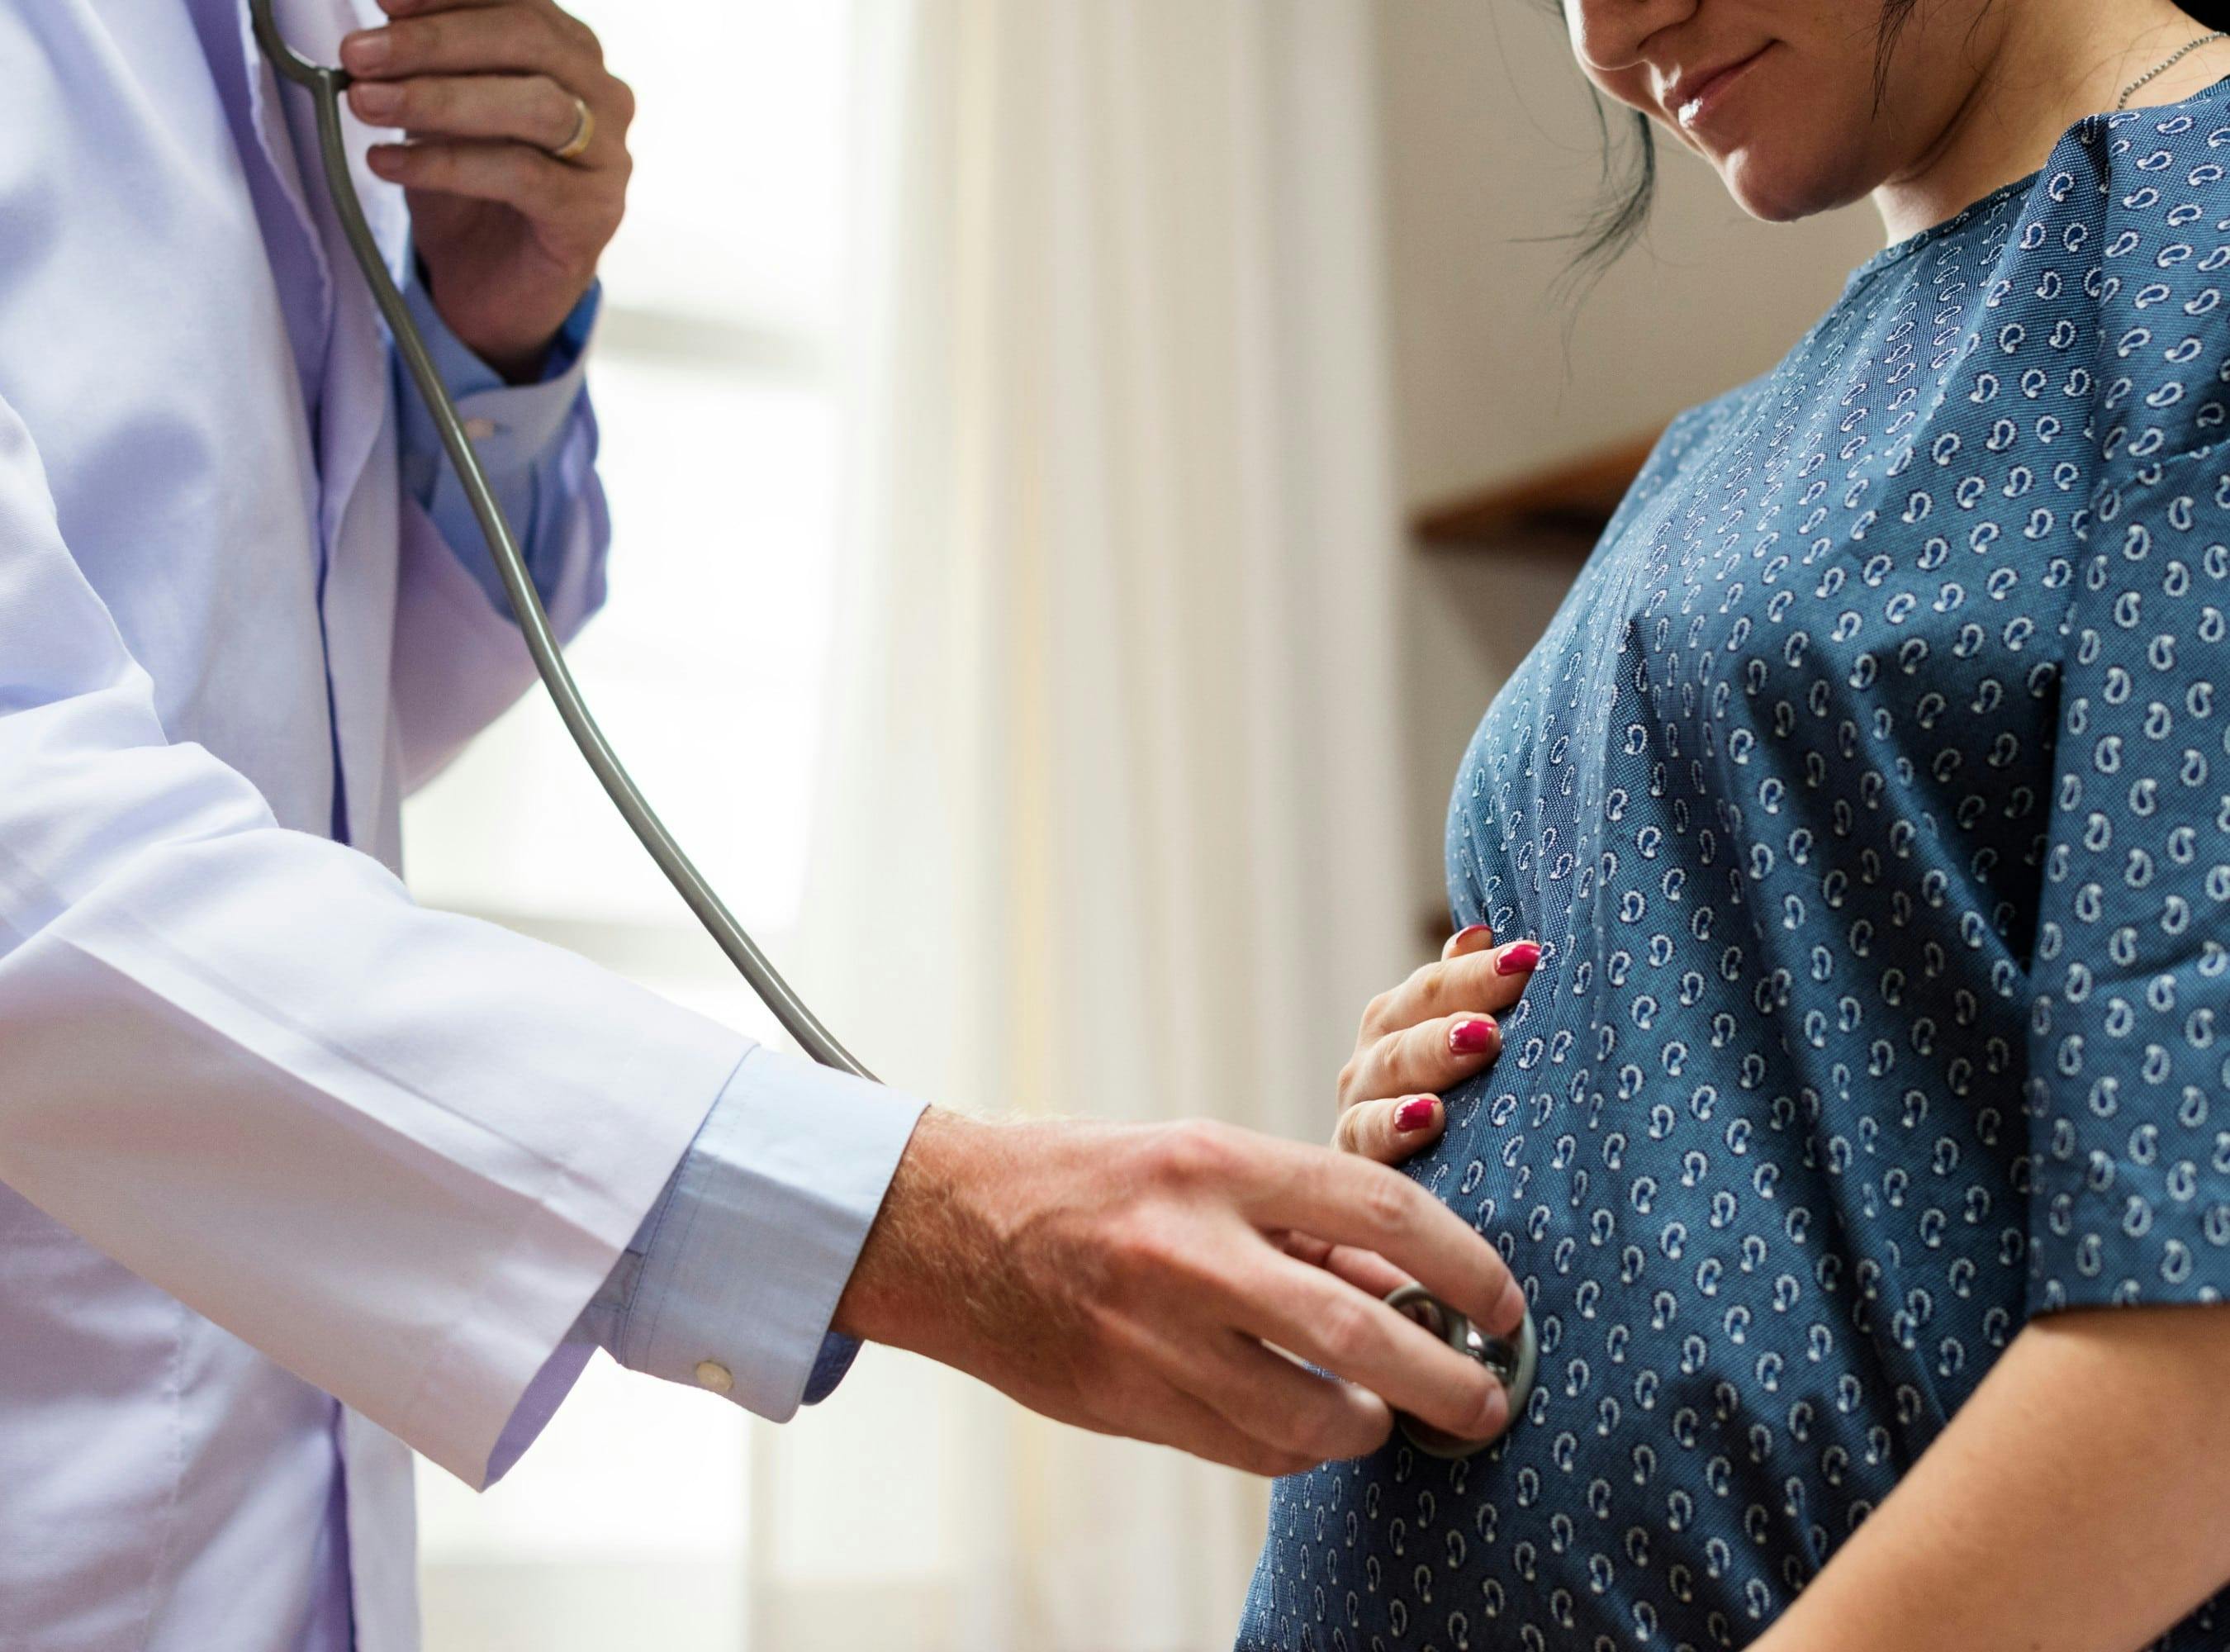 Maternal Fetal Medicine Experts Investigate Fatal Army Hospital C-Section